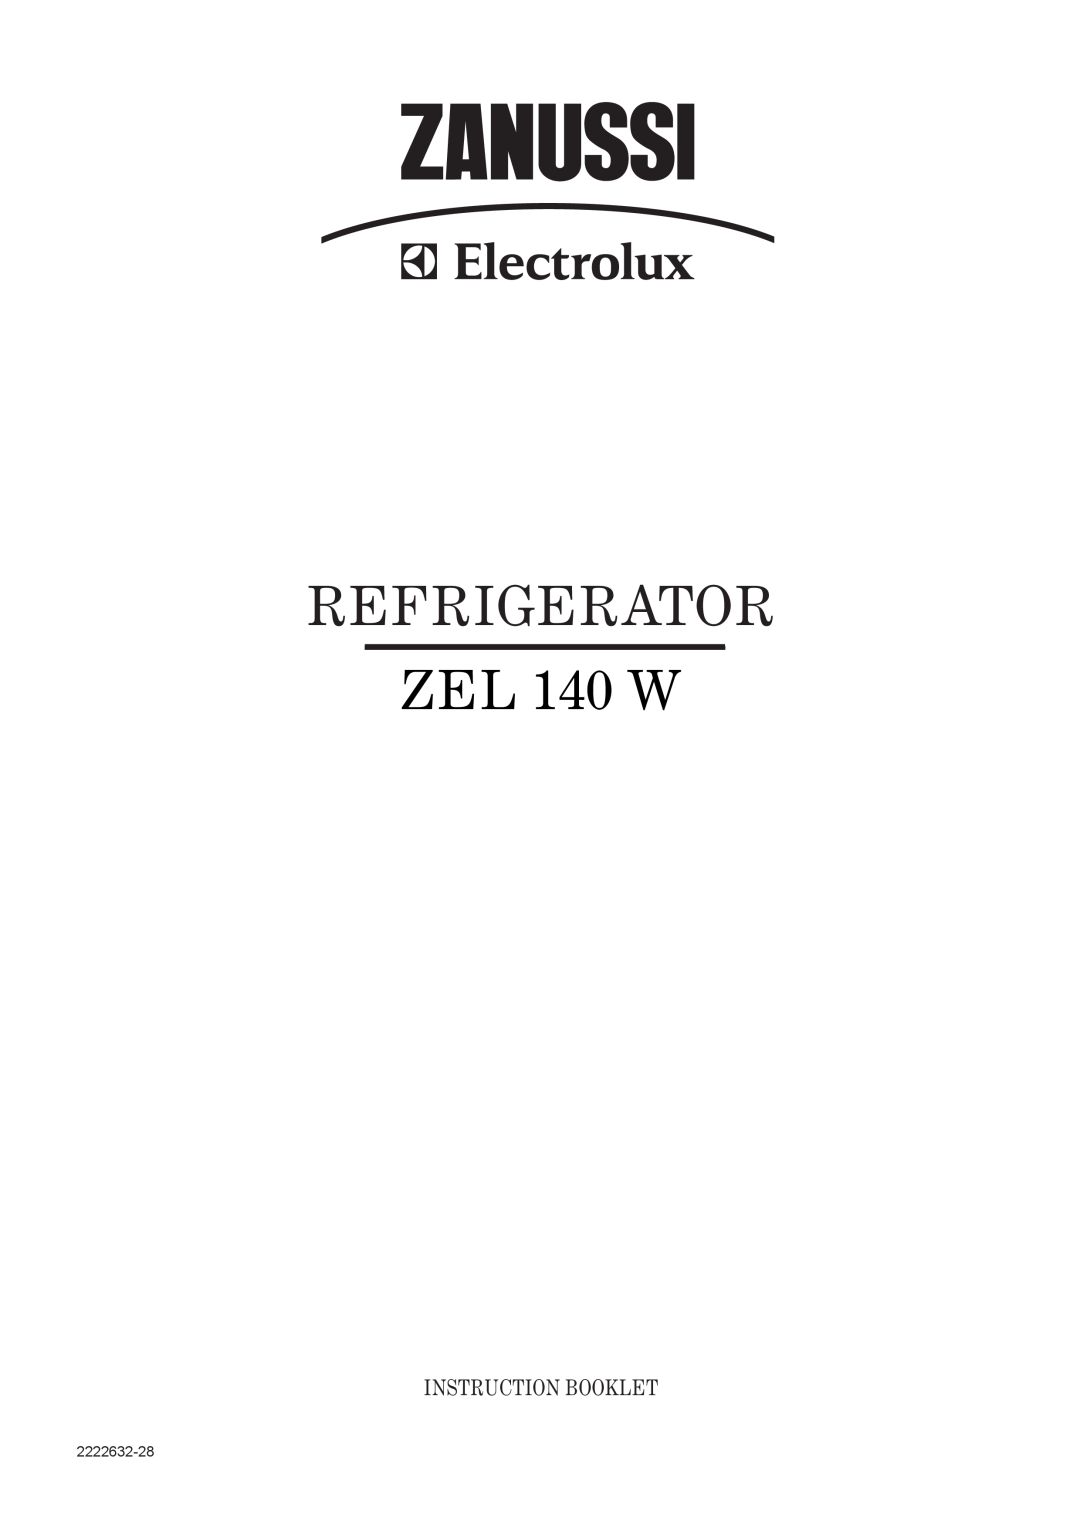 Zanussi ZEL 140 W manual Refrigerator, Instruction Booklet, 2222632-28 